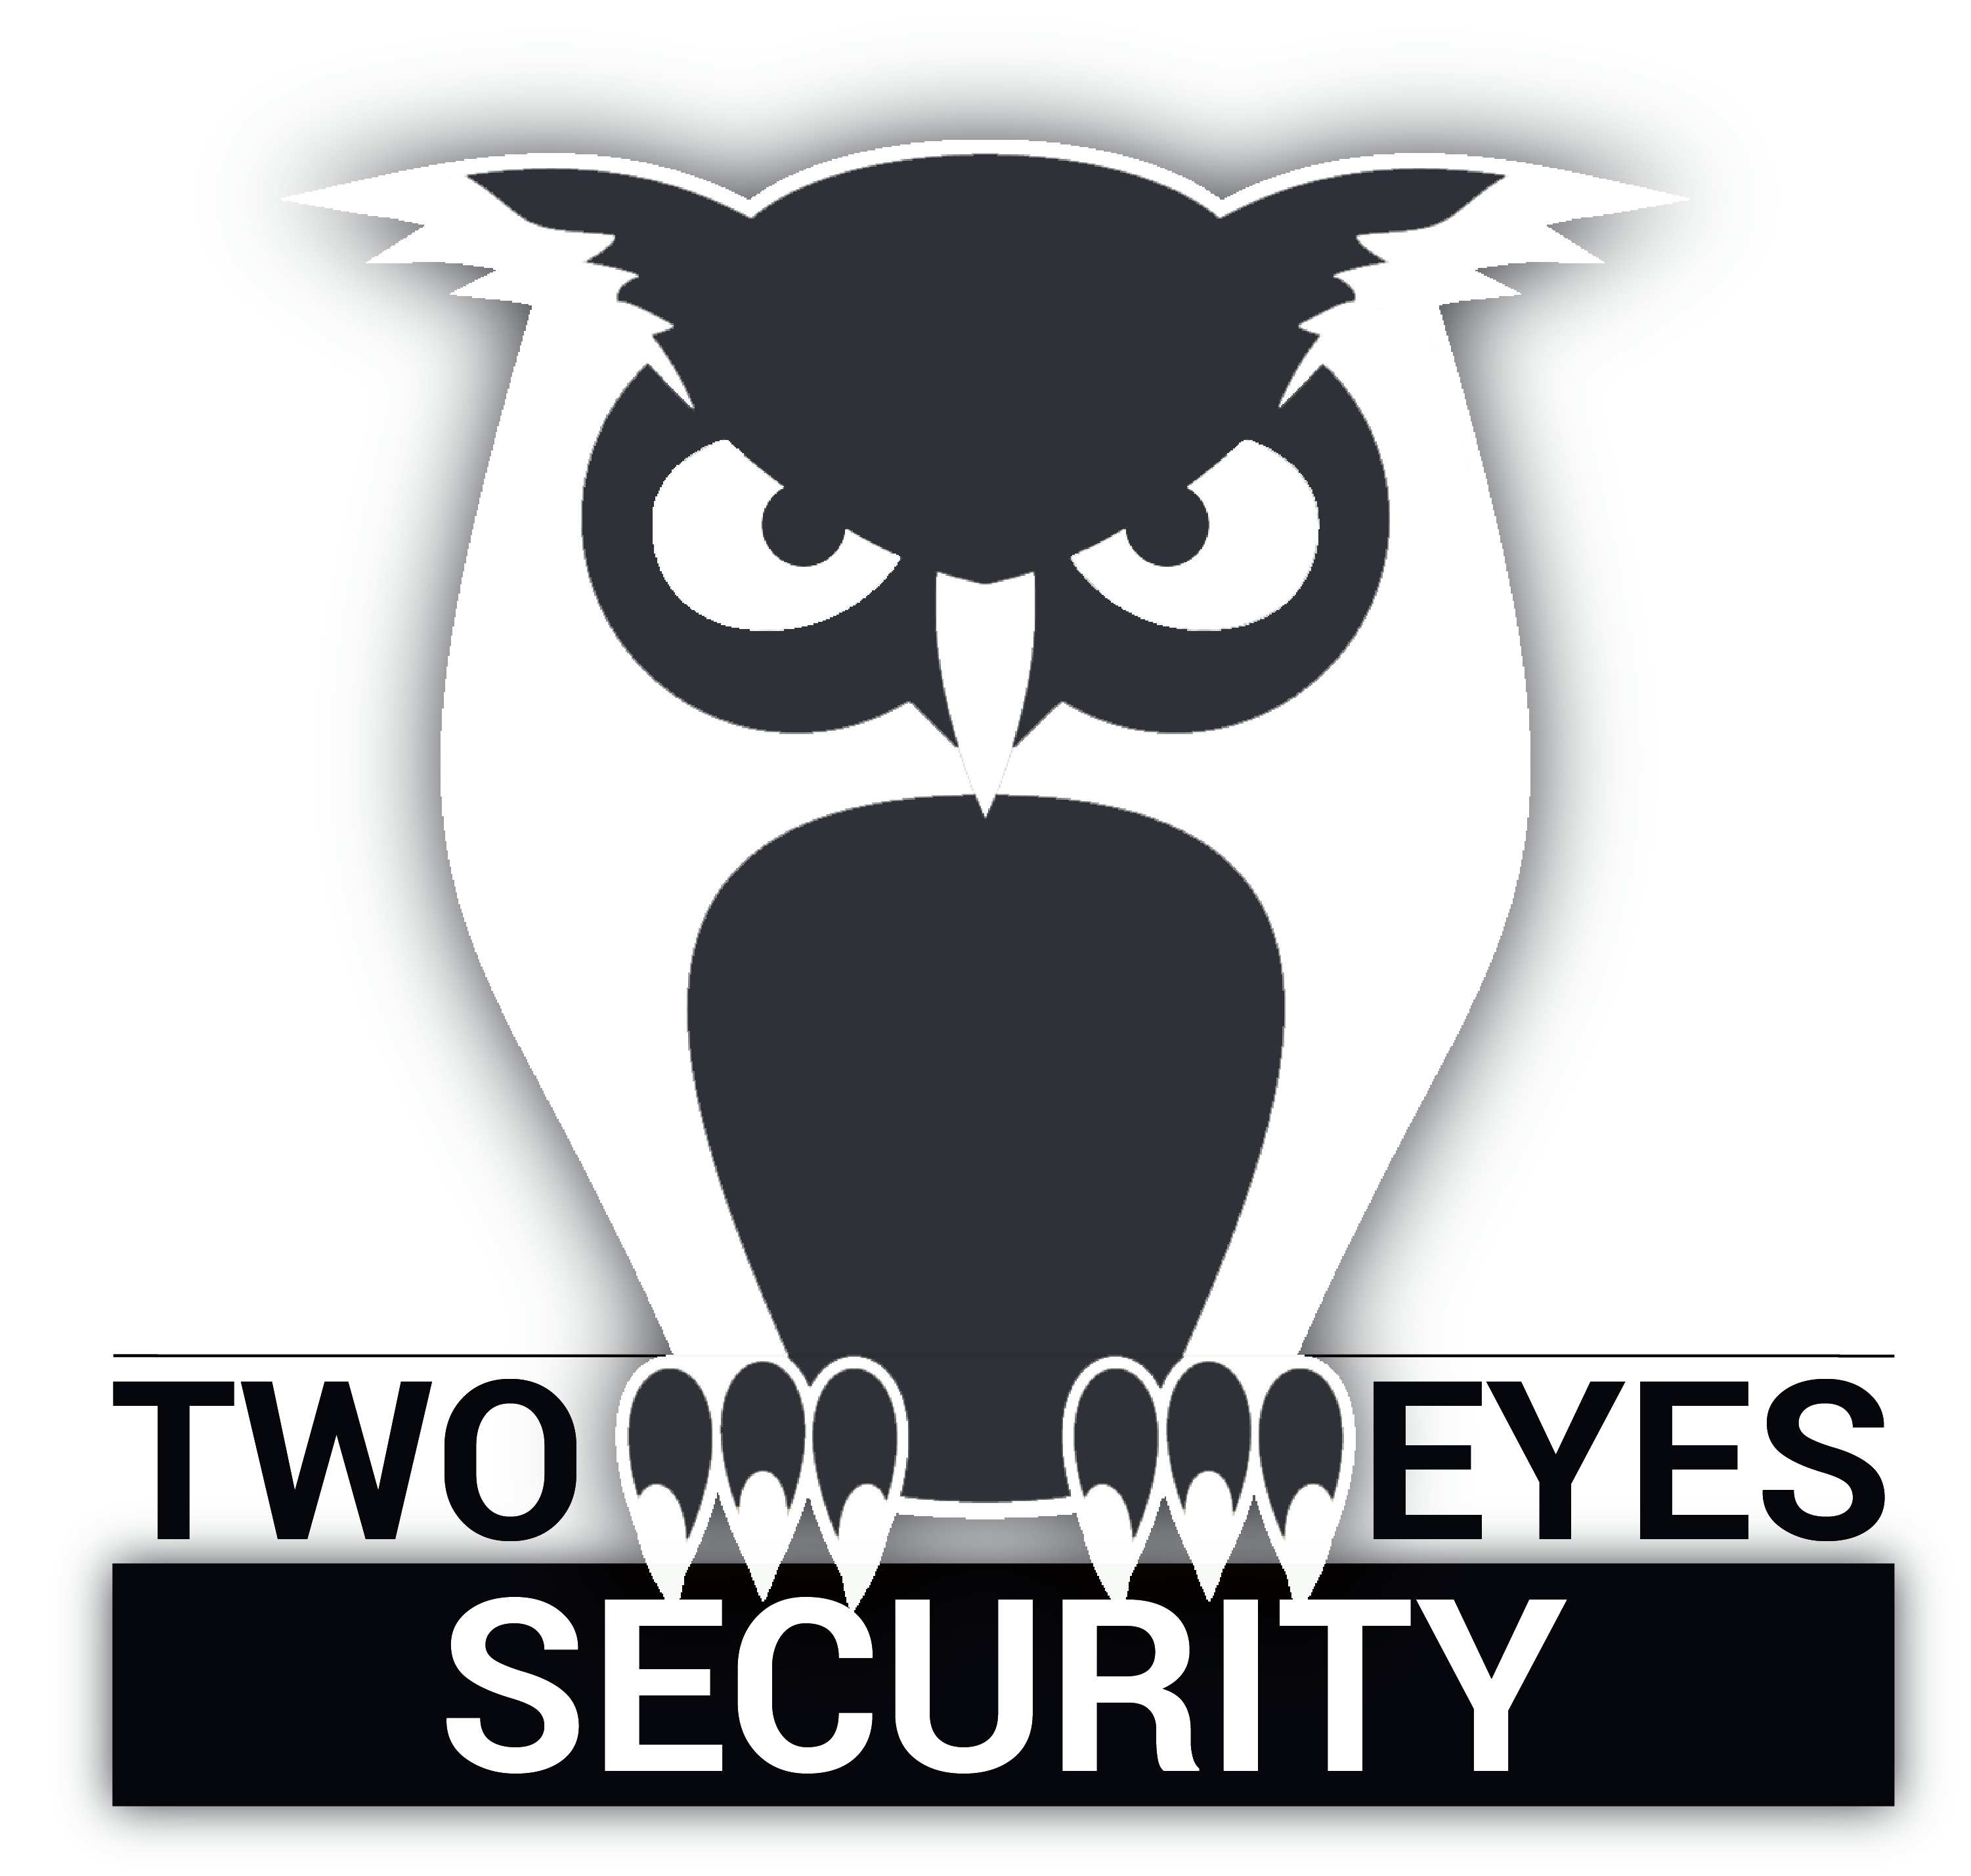 TWO EYES SECURITY GmbH-logo